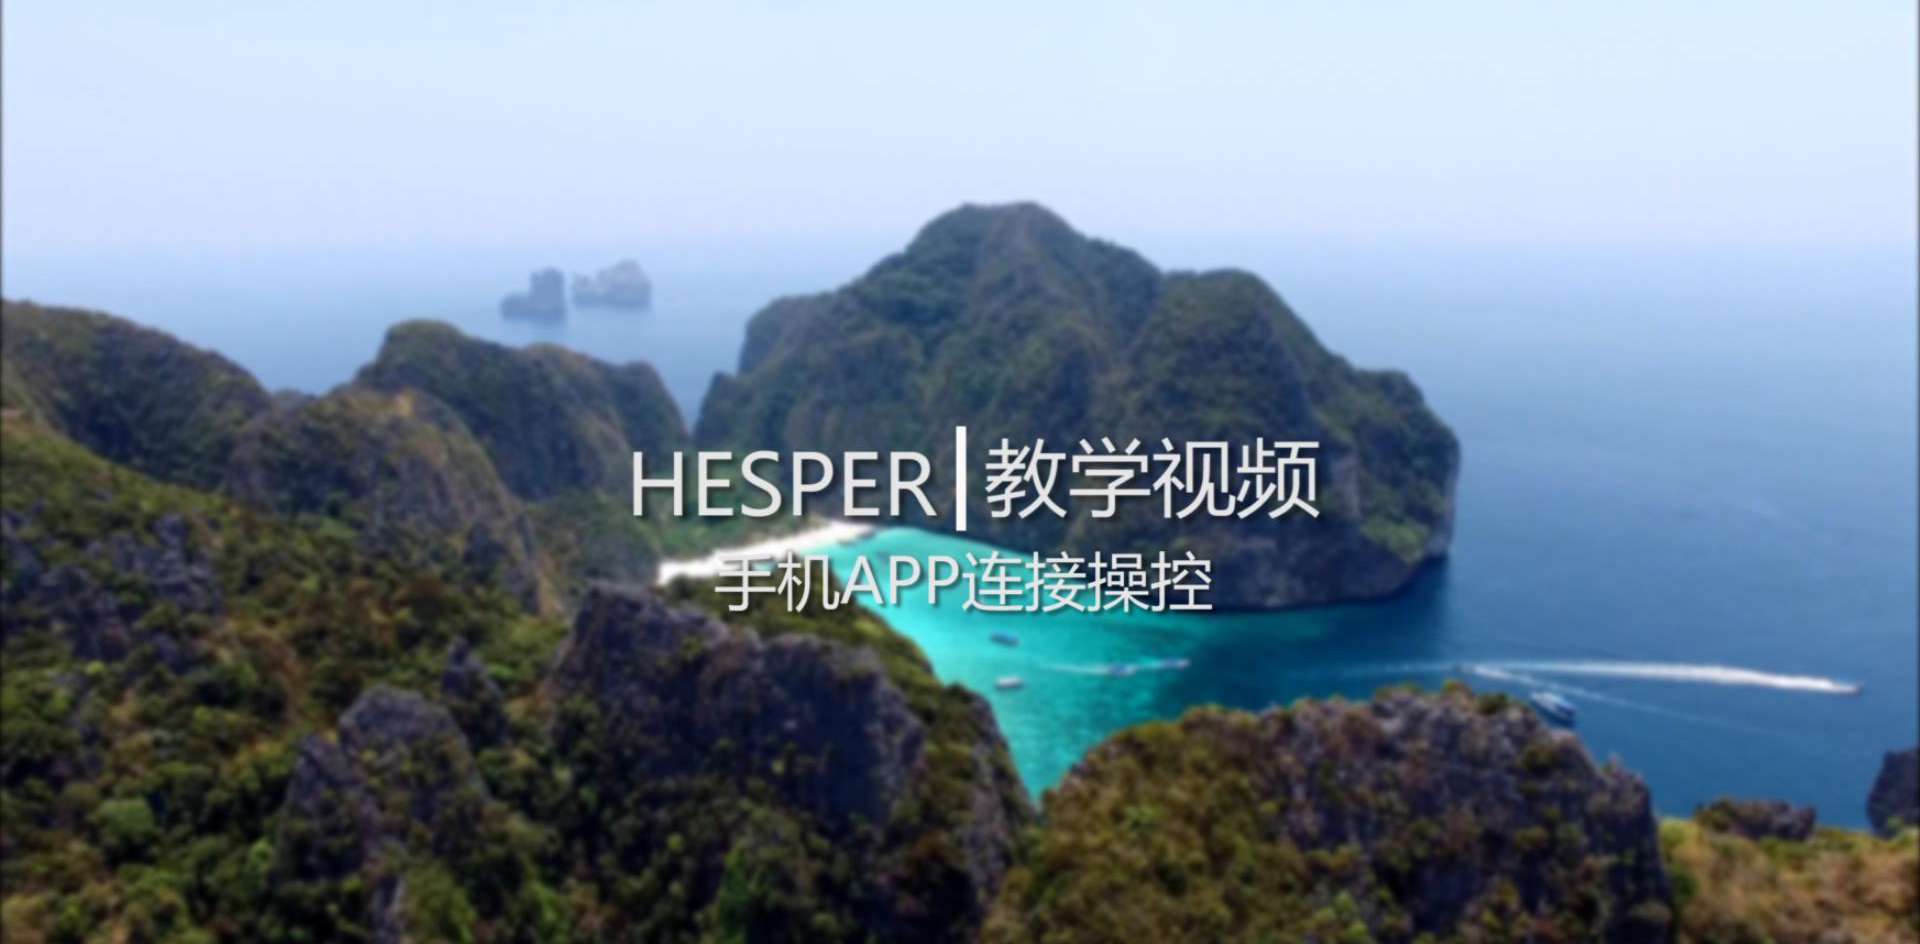 HESPER - APP版 起飛前準備